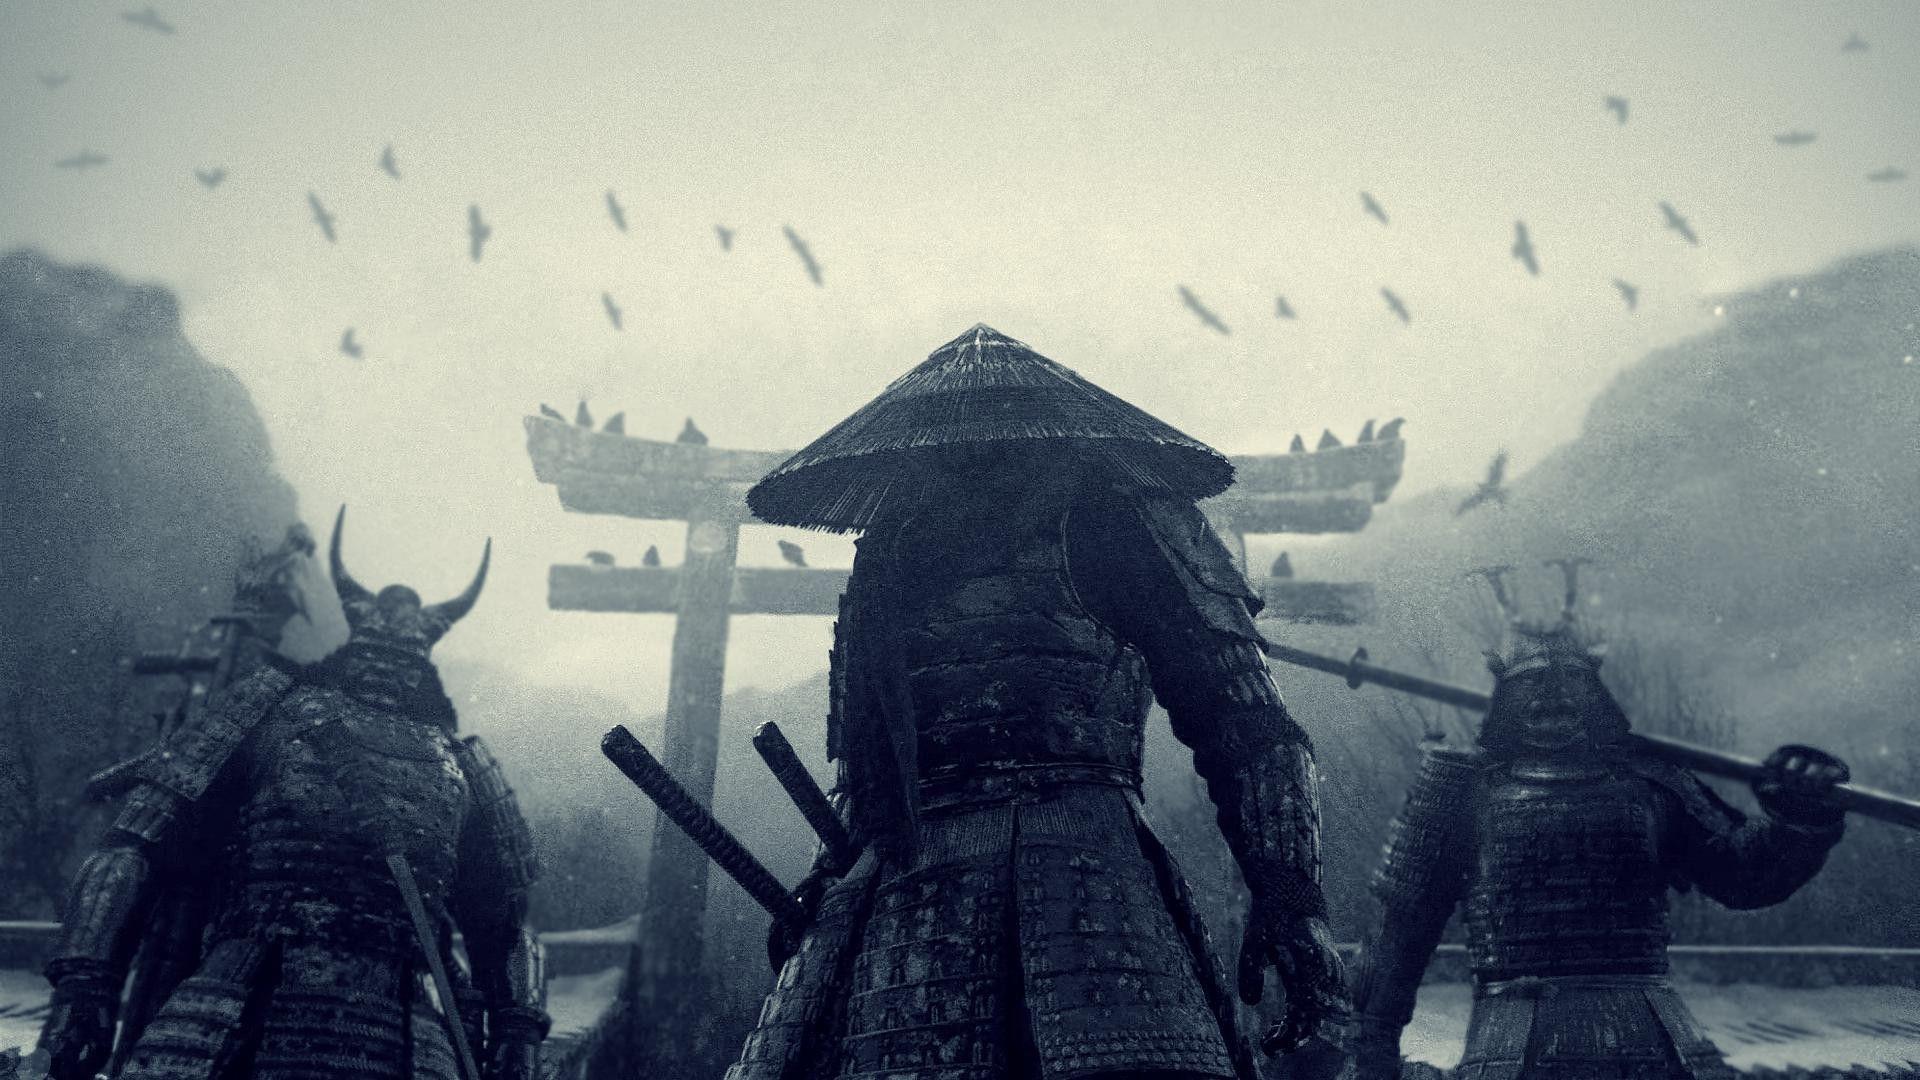 Samurai Wallpaper and Background Image